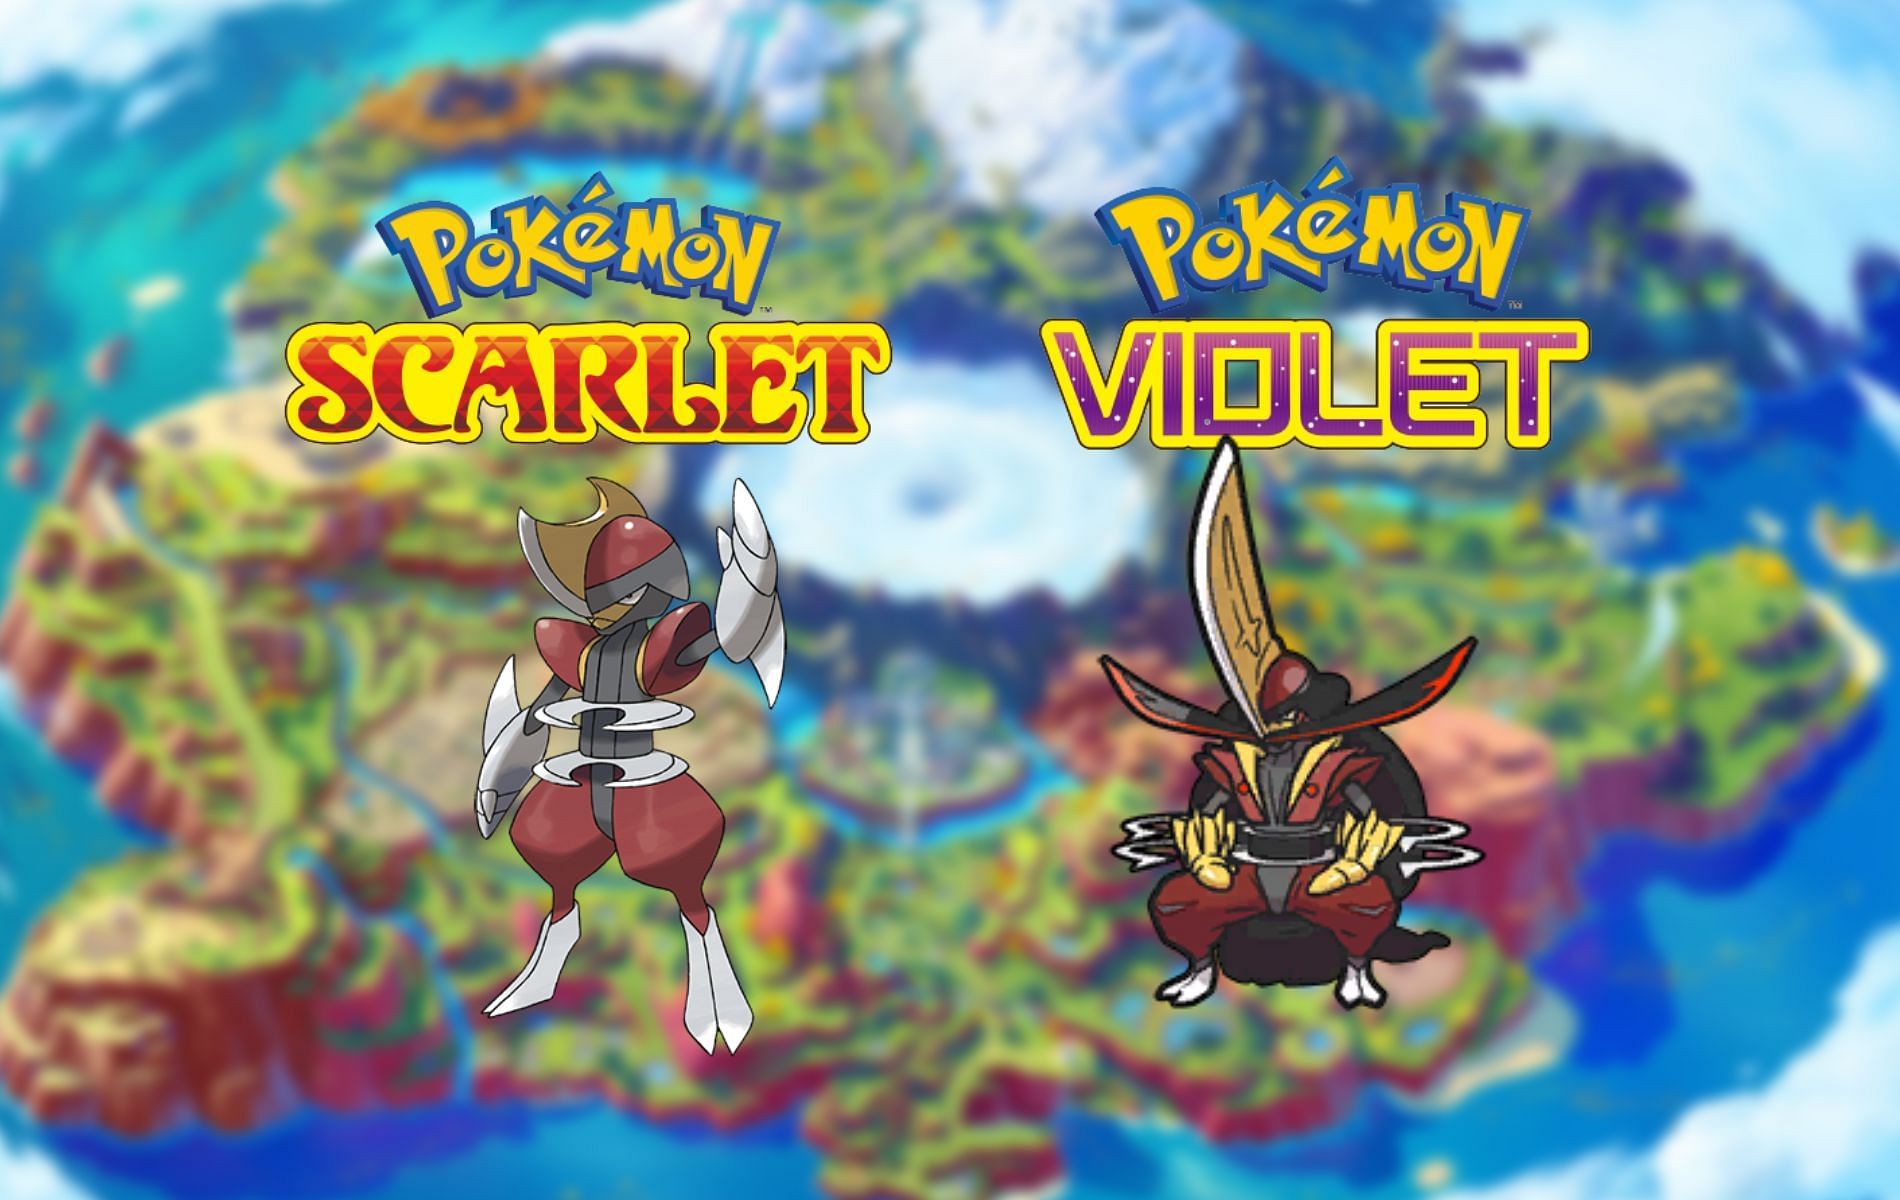 Pokemon Scarlet & Violet: How to Evolve Bisharp into Kingambit